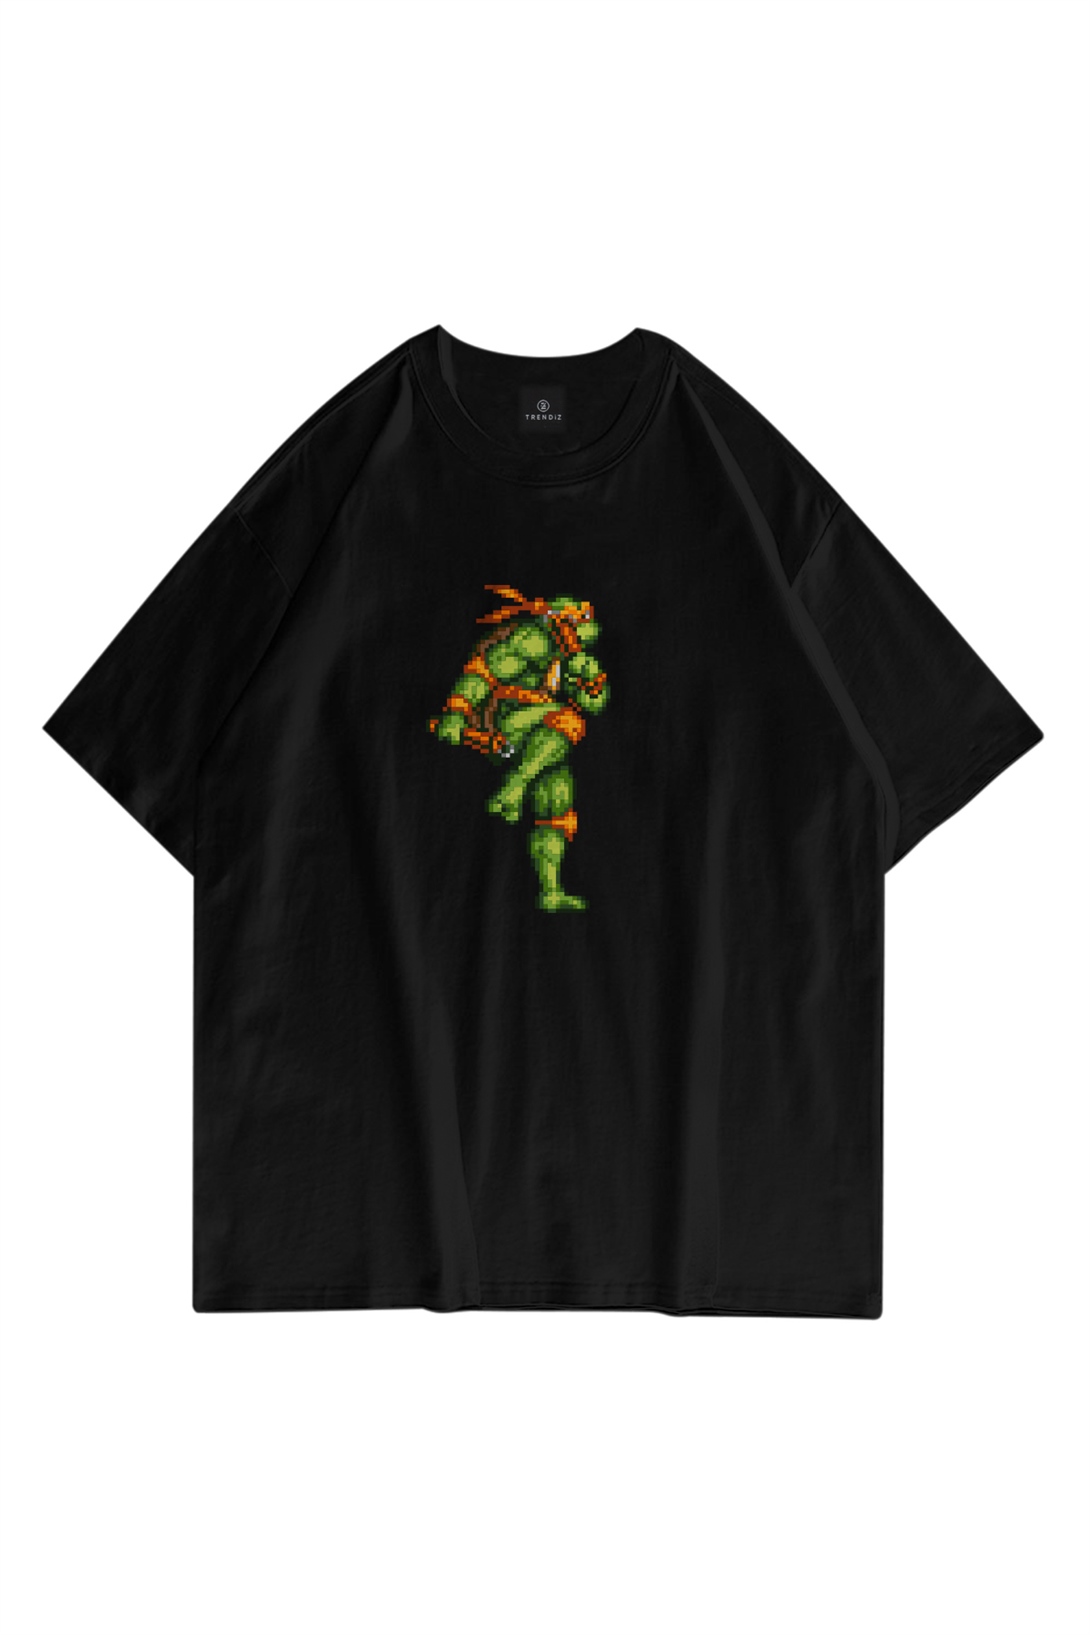 Trendiz Unisex Michelangelo Ninja Turtles Siyah Tshirt